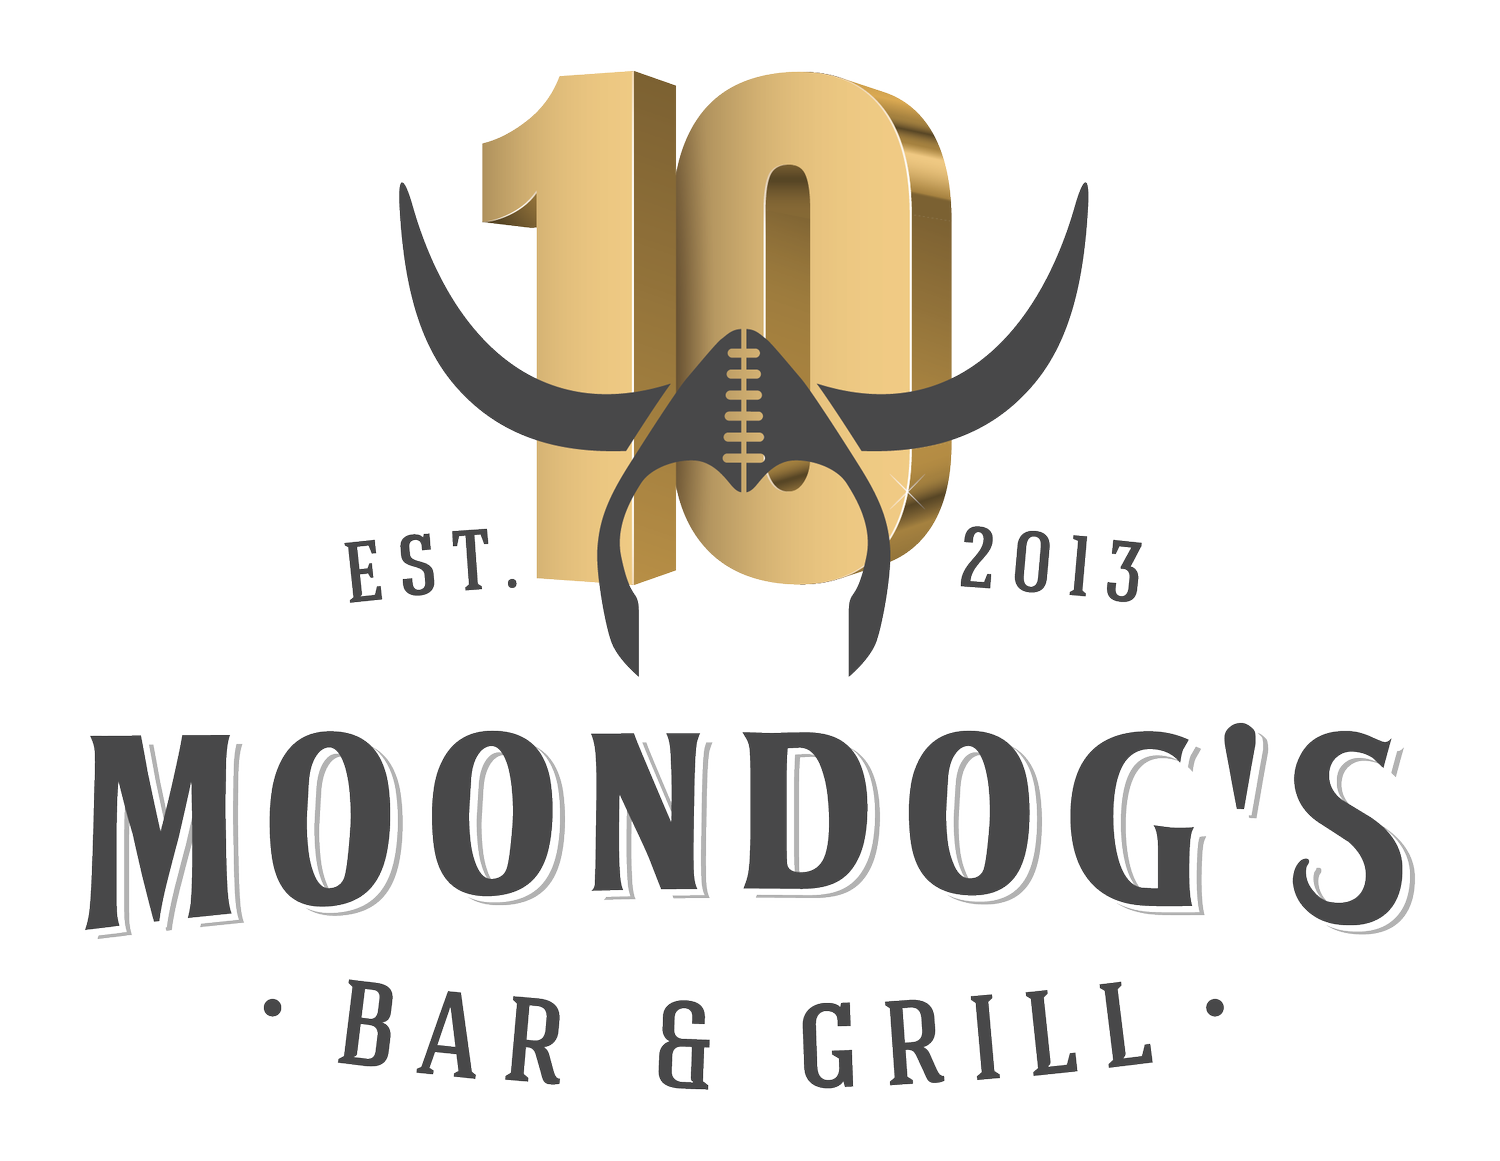 Moondog's Bar & Grill